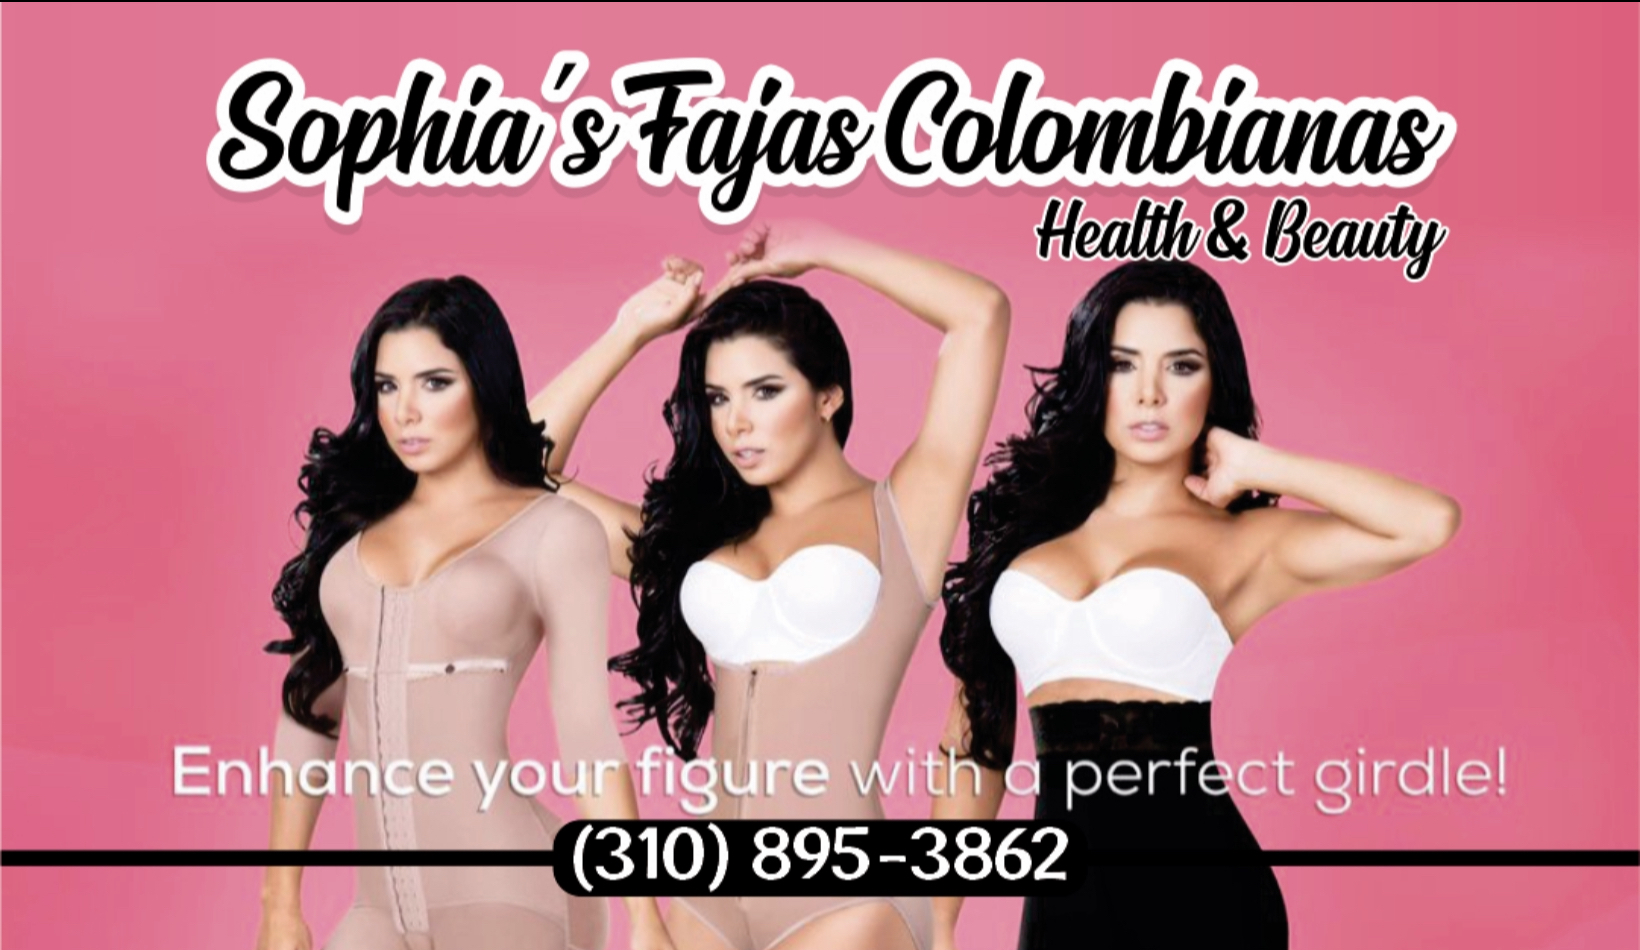 Home  Sophias Fajas Colombianas